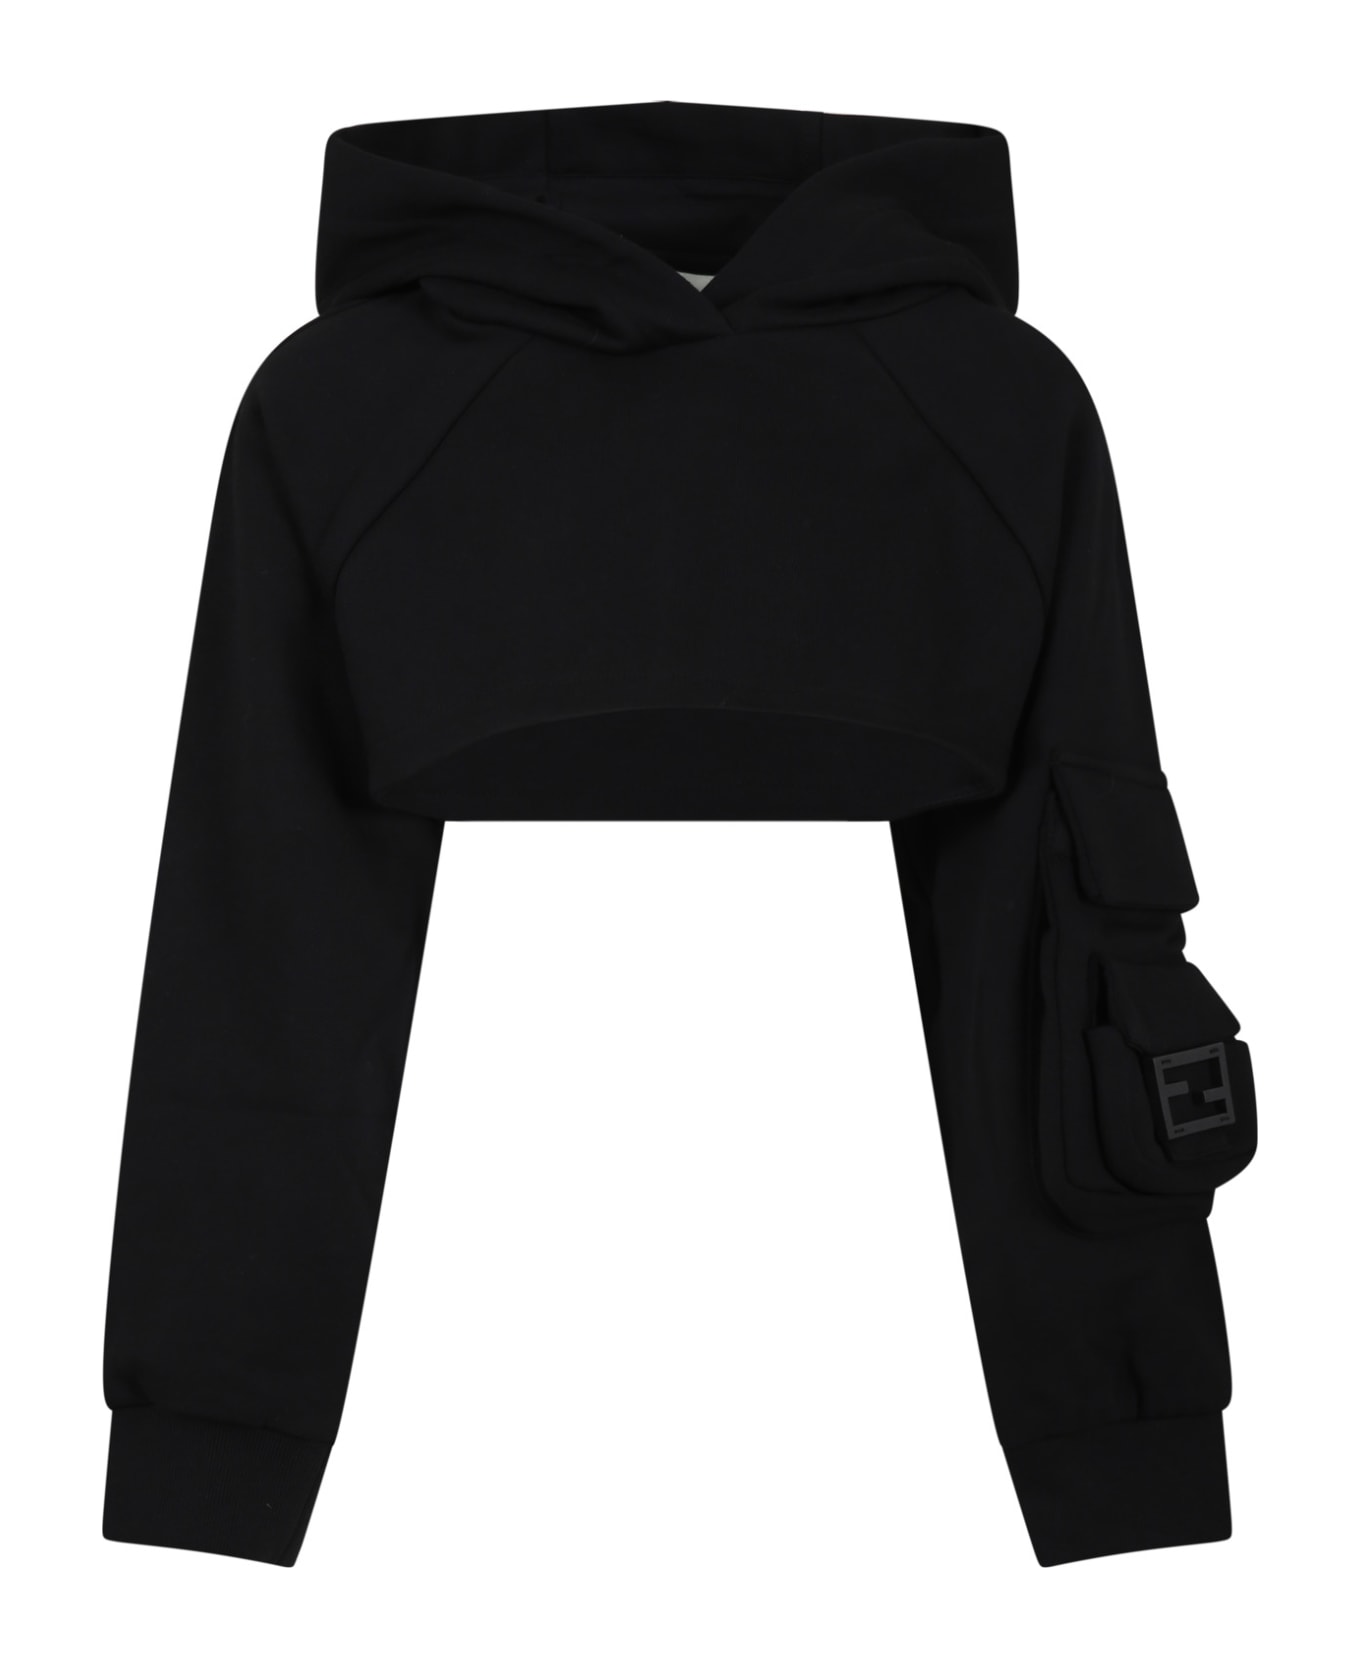 Fendi Black Sweatshirt For Girl With Baguette - Black